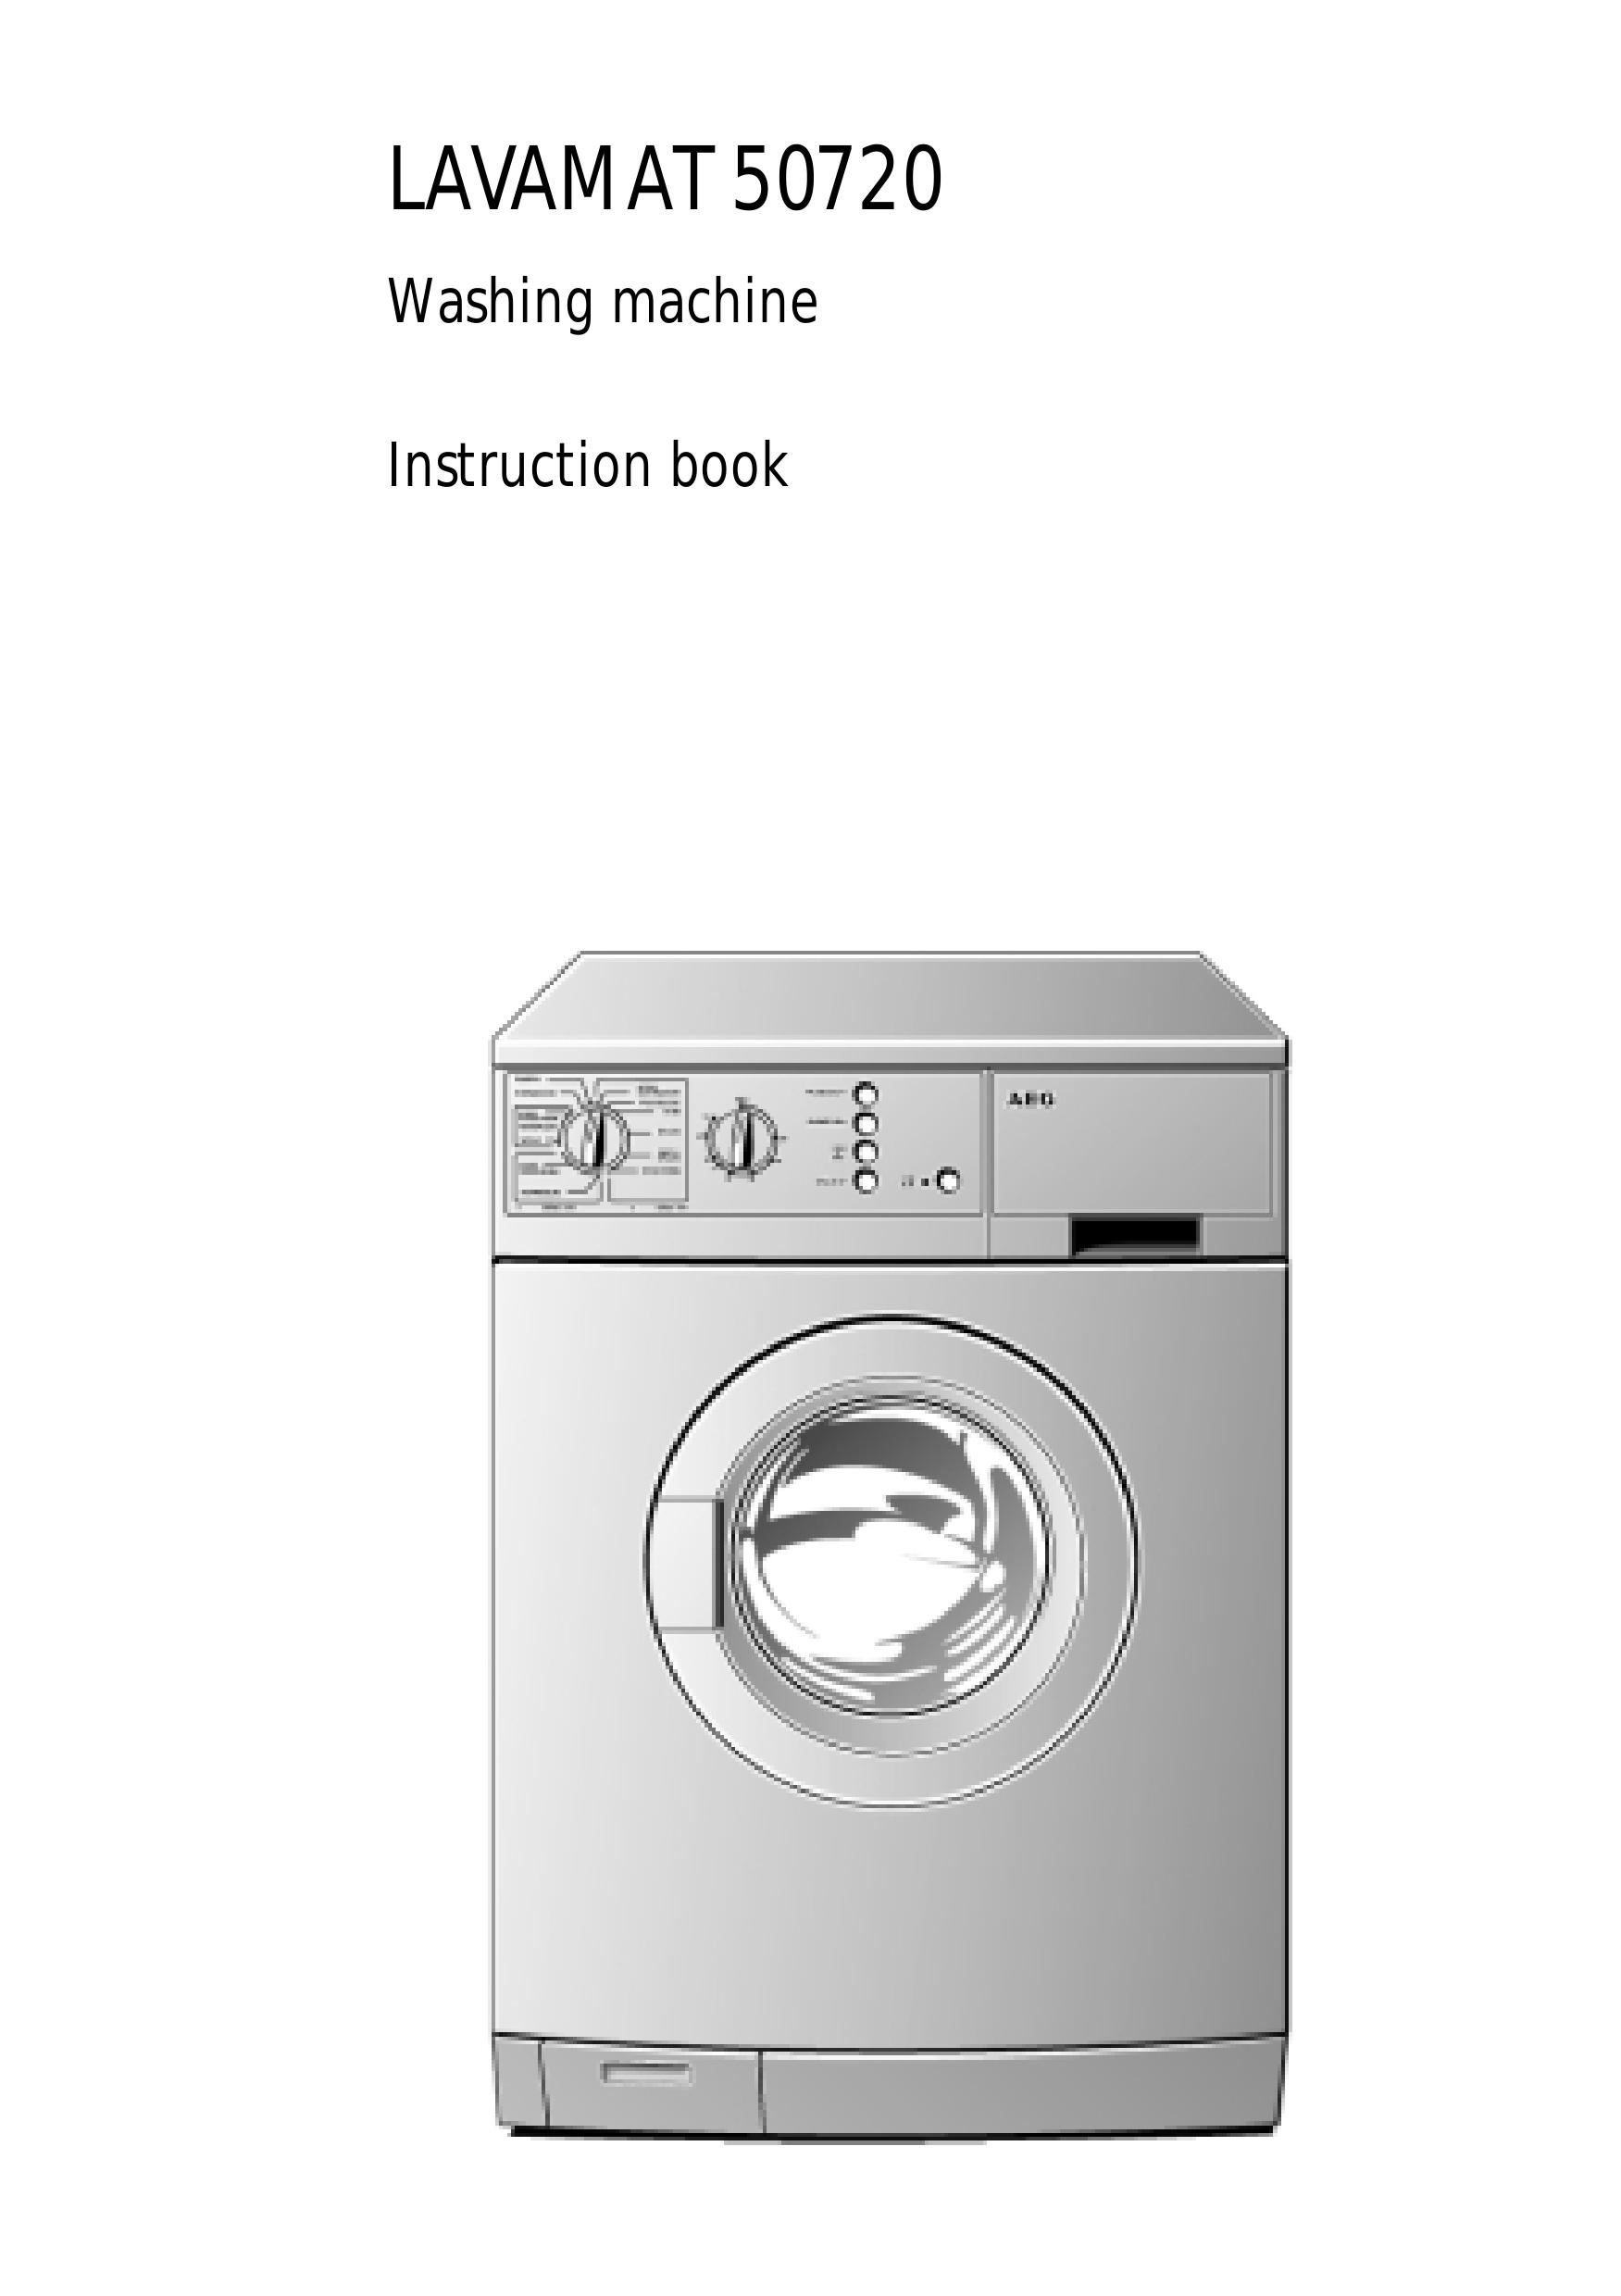 AEG 50720 Washer User Manual